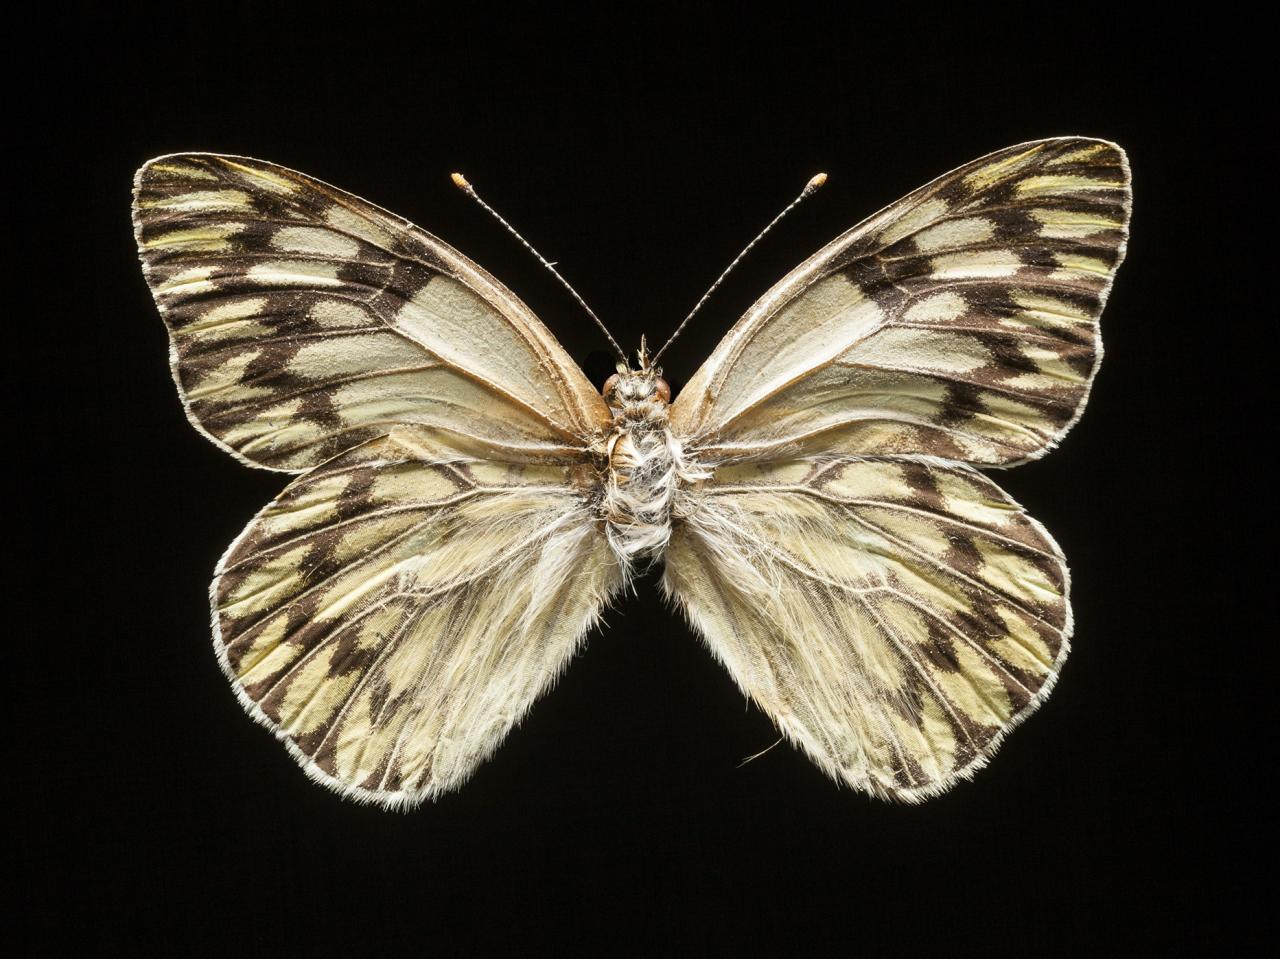 Tatochila autodice blanchardi (Butler, 1881)